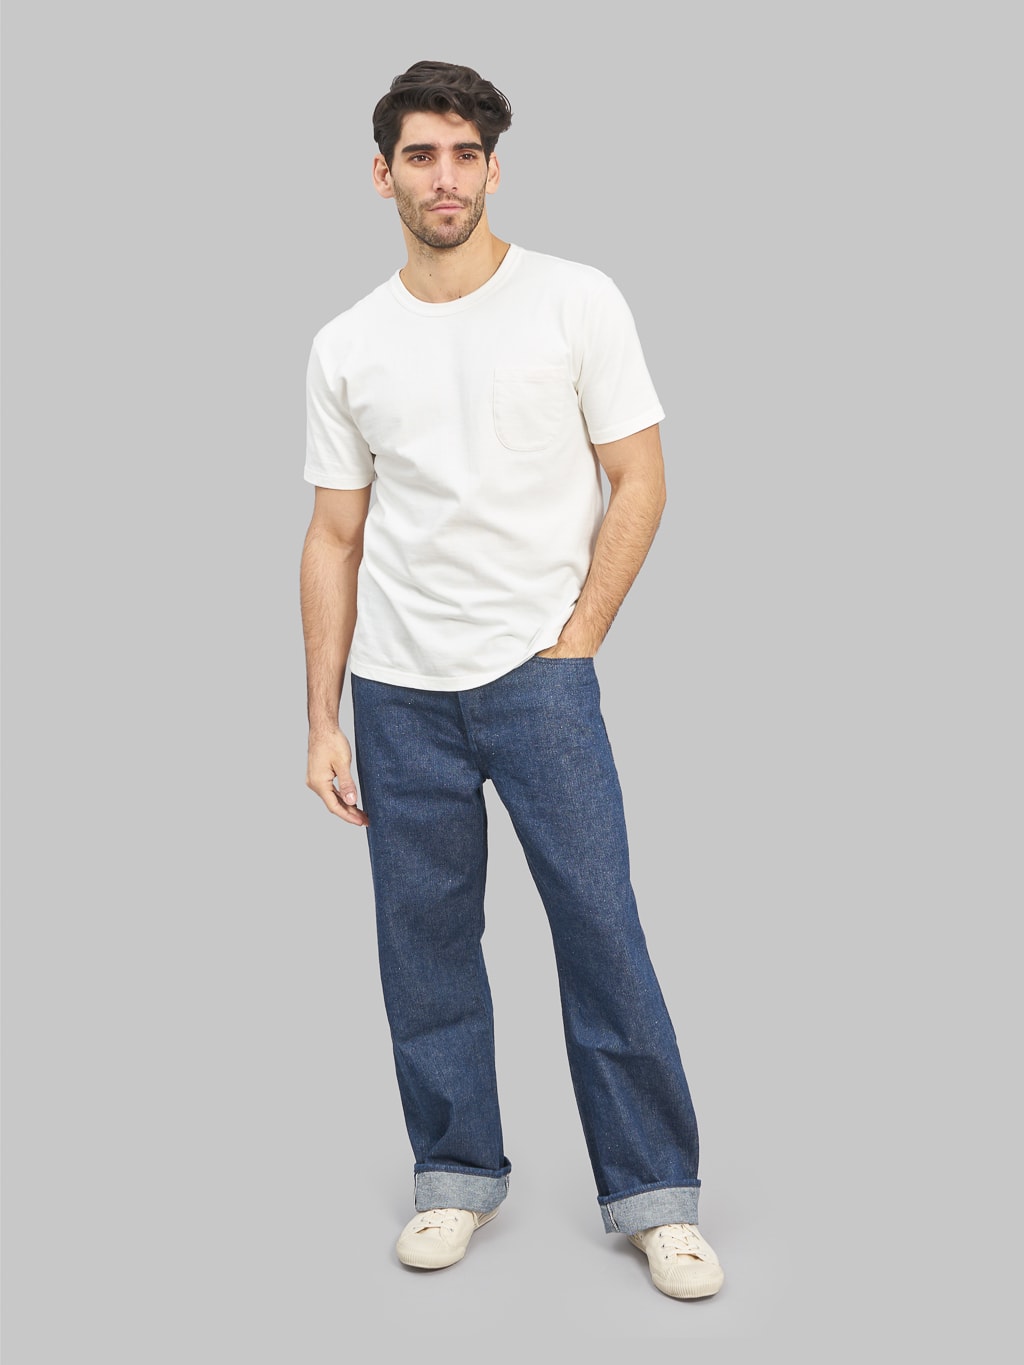 fullcount 1121 duke original selvedge denim super wide jeans style